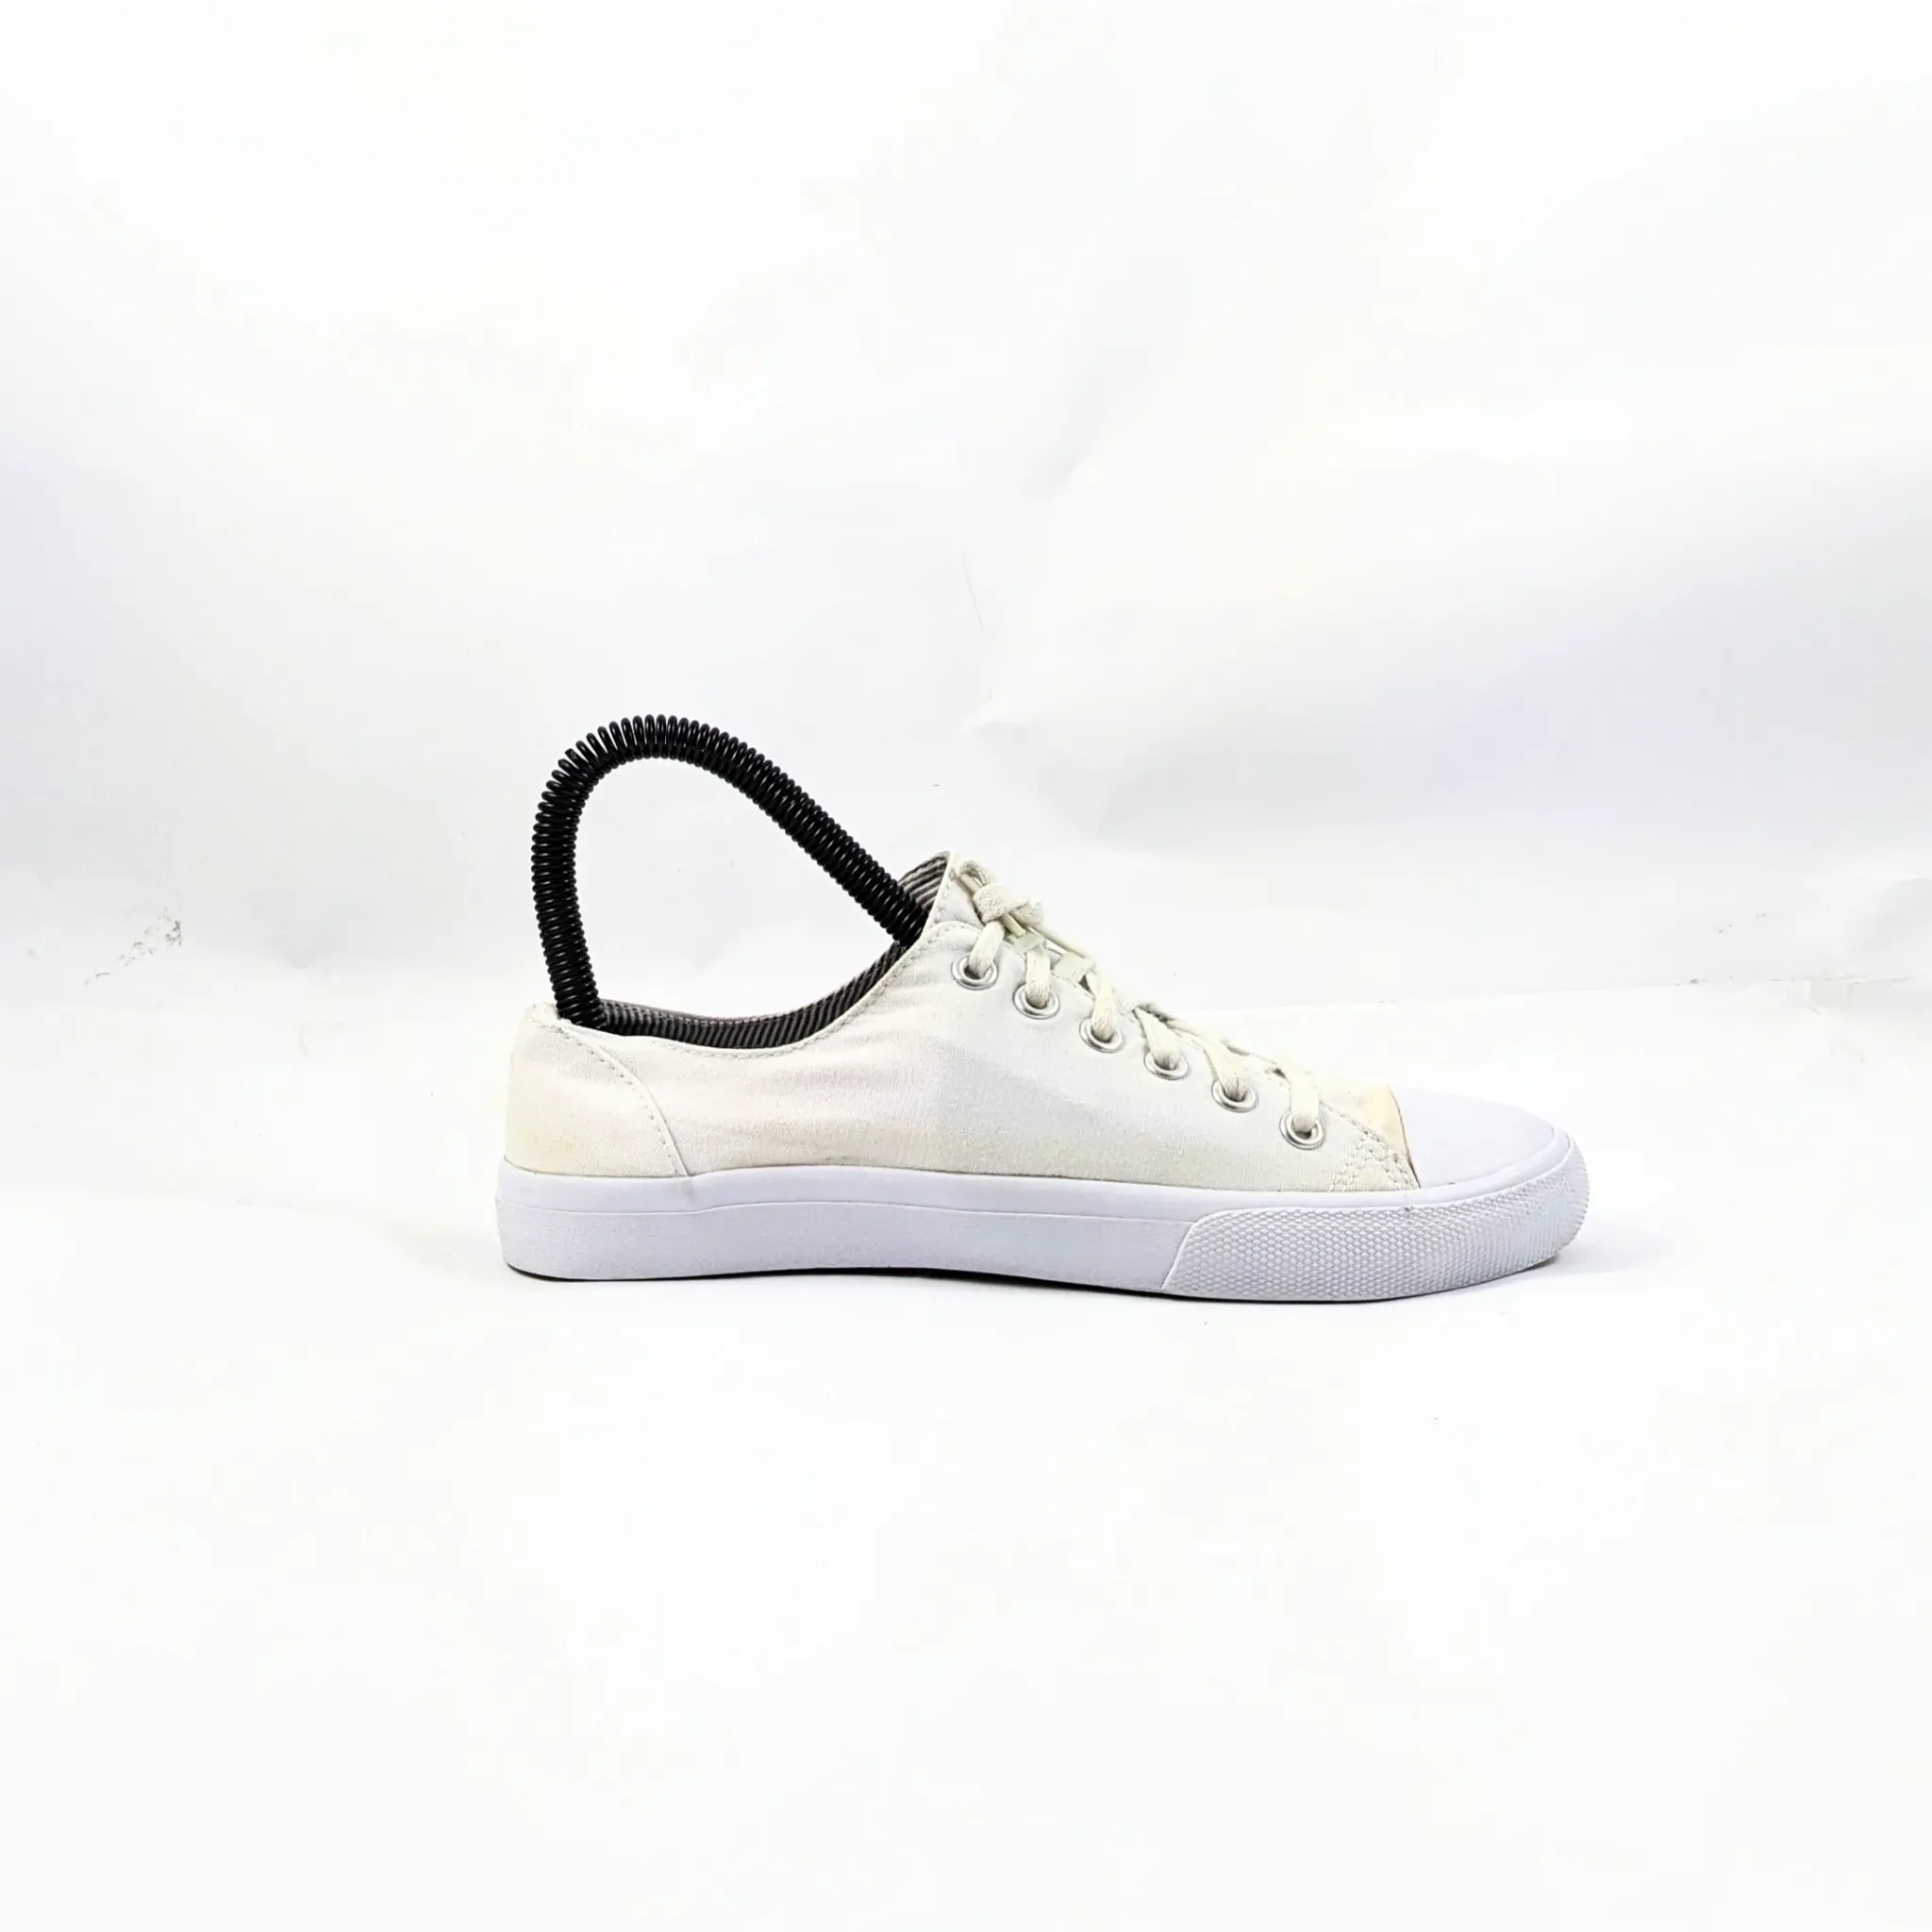 Mossimo White Sneakers